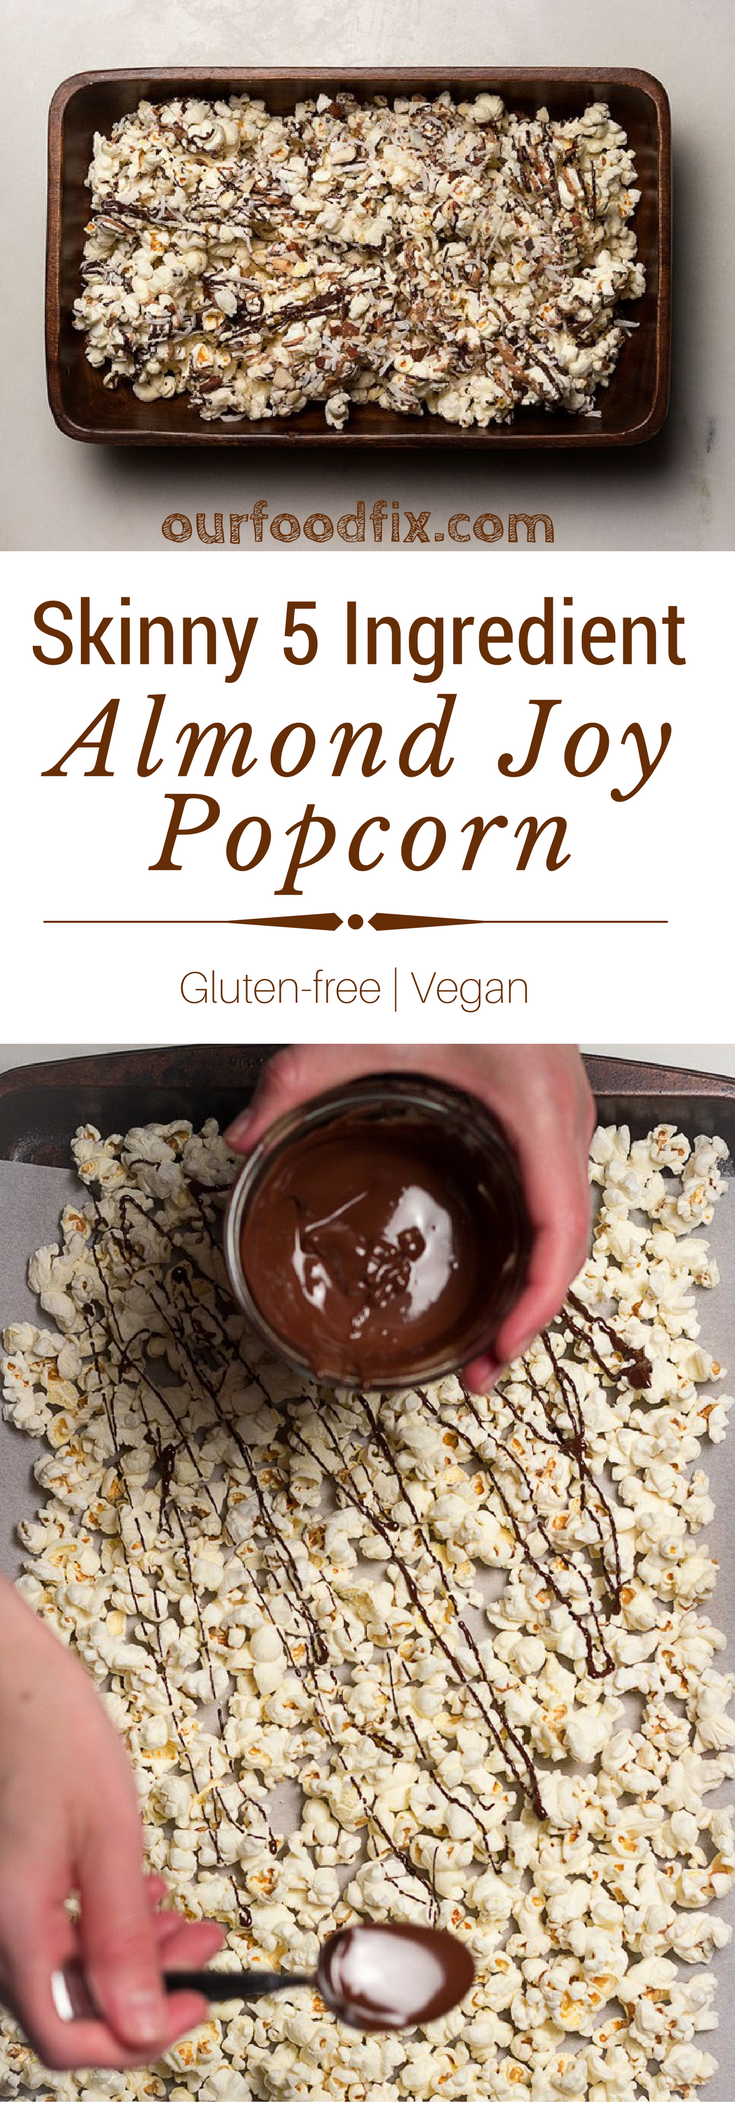 Almond Joy Popcorn